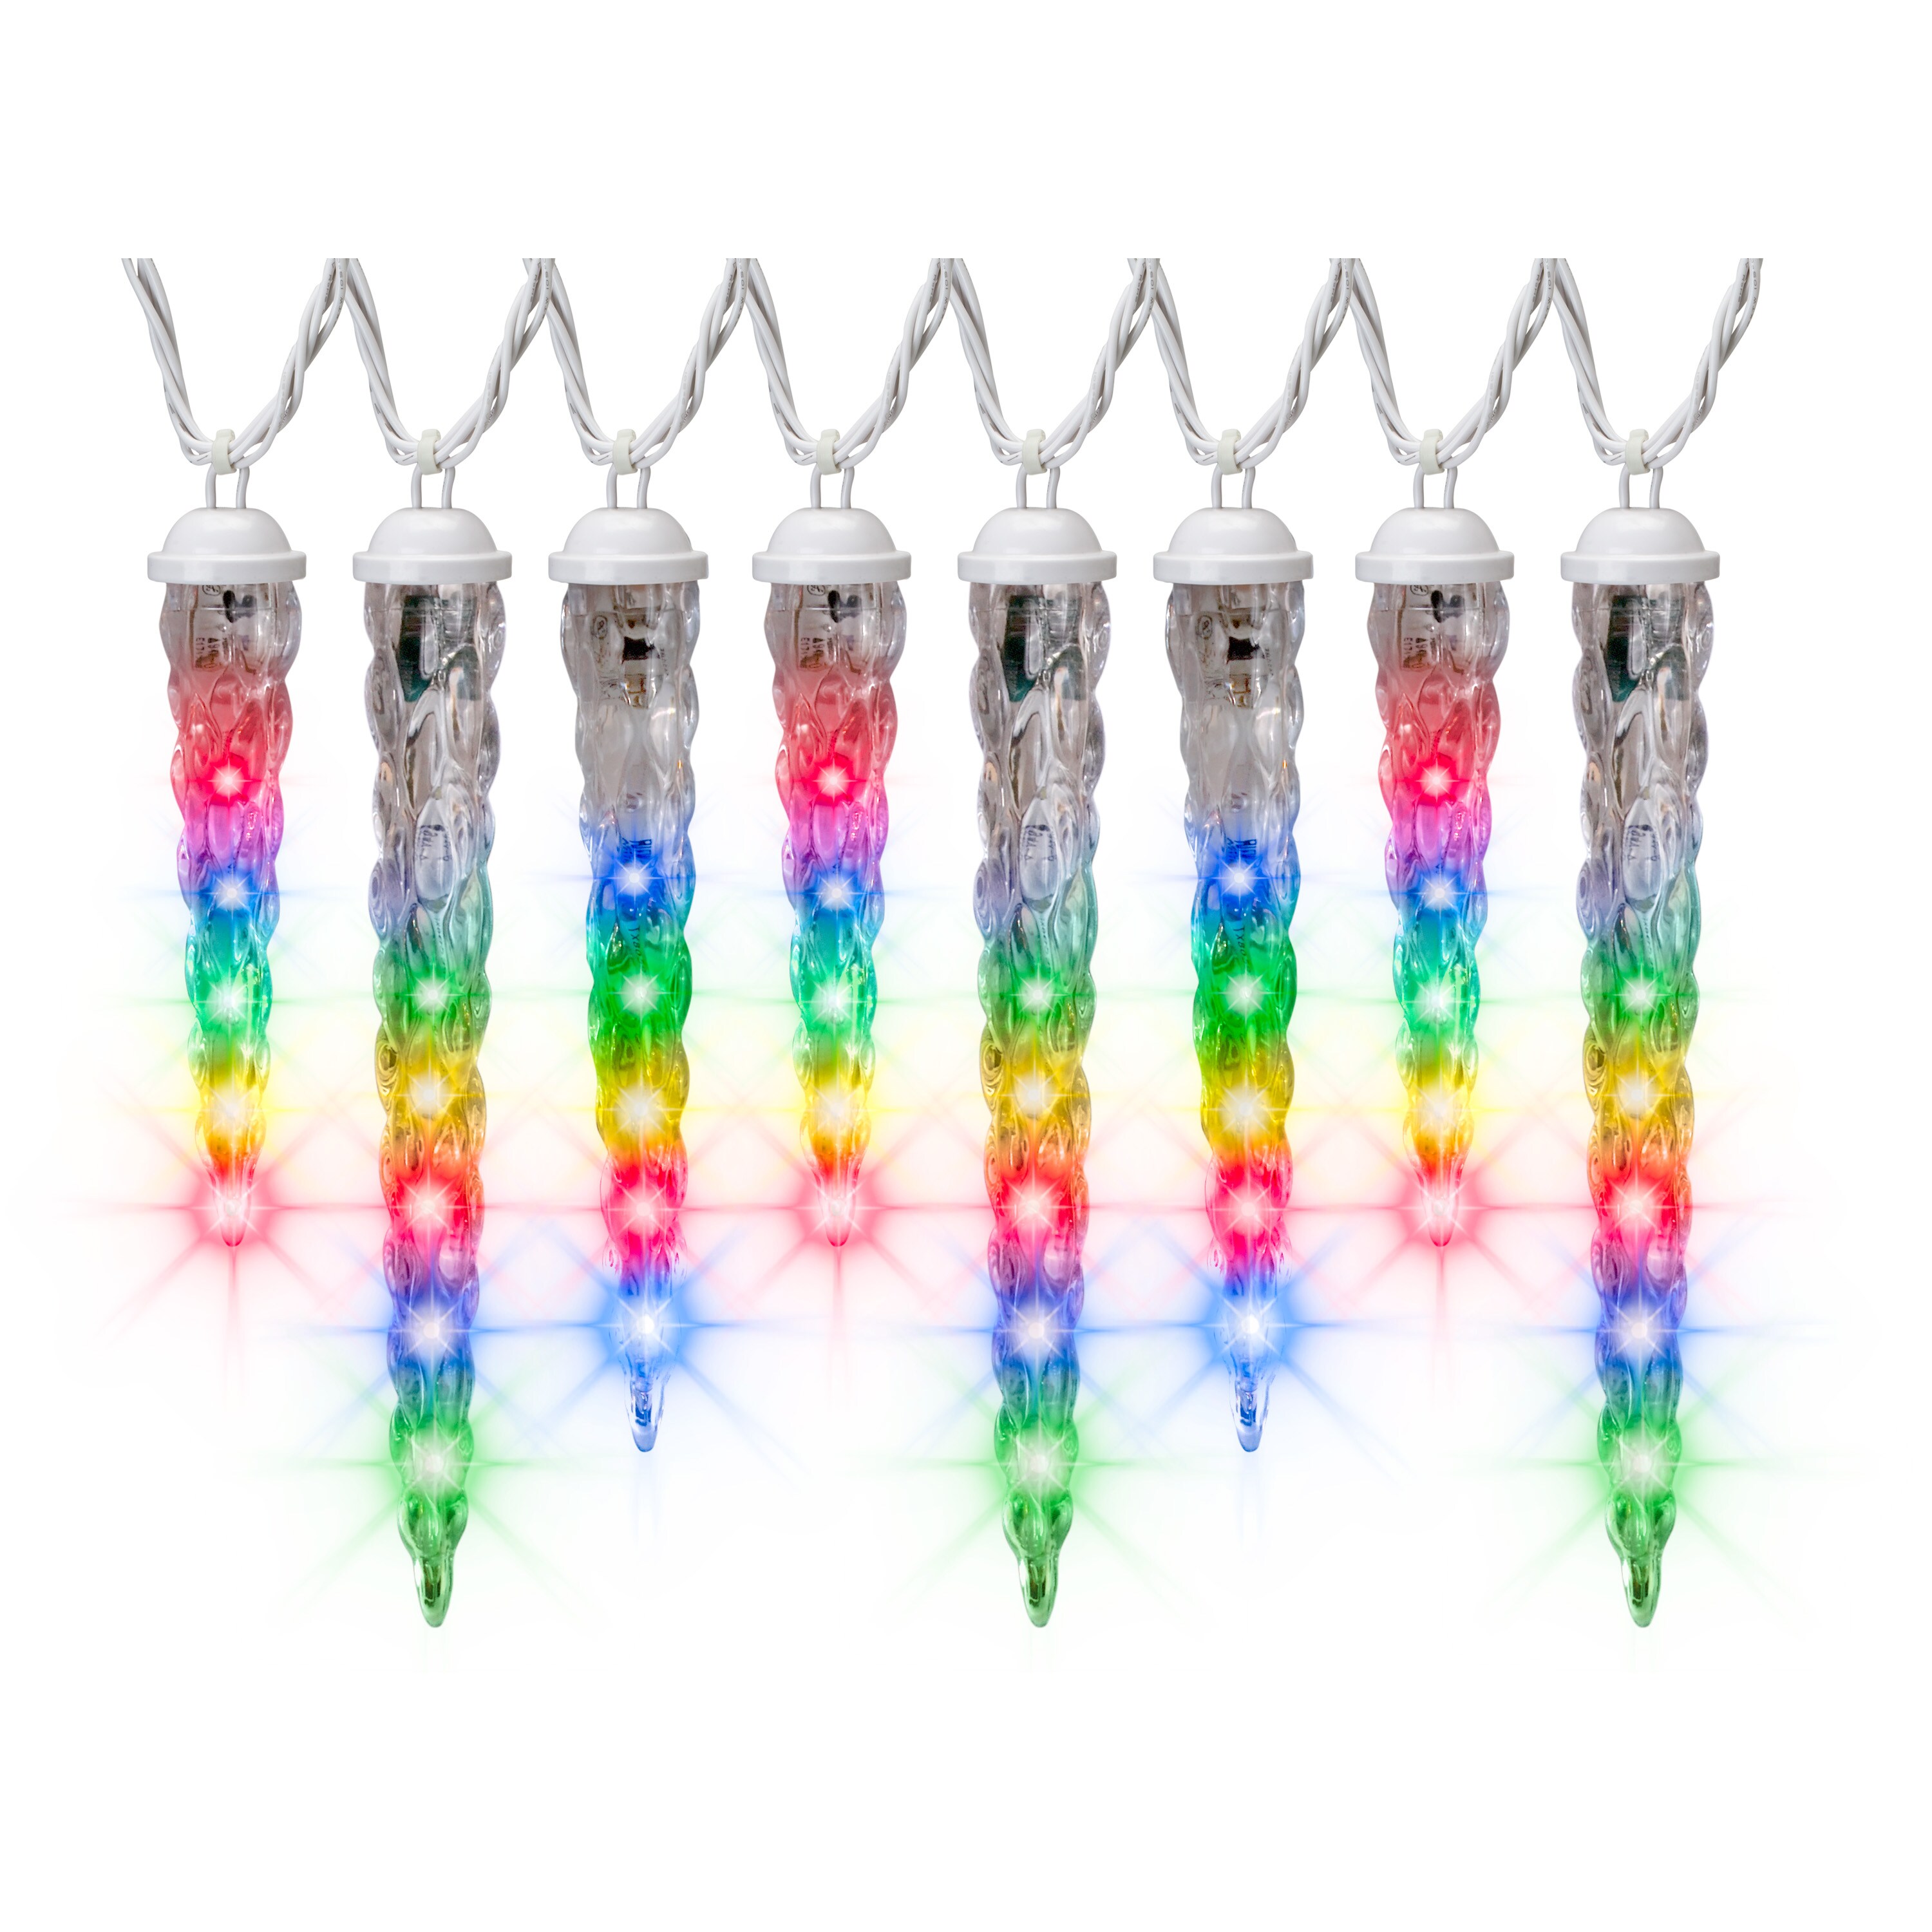 Gemmy Lightshow 10 White LED Falling Shooting Star Christmas Icicle Light Decor 